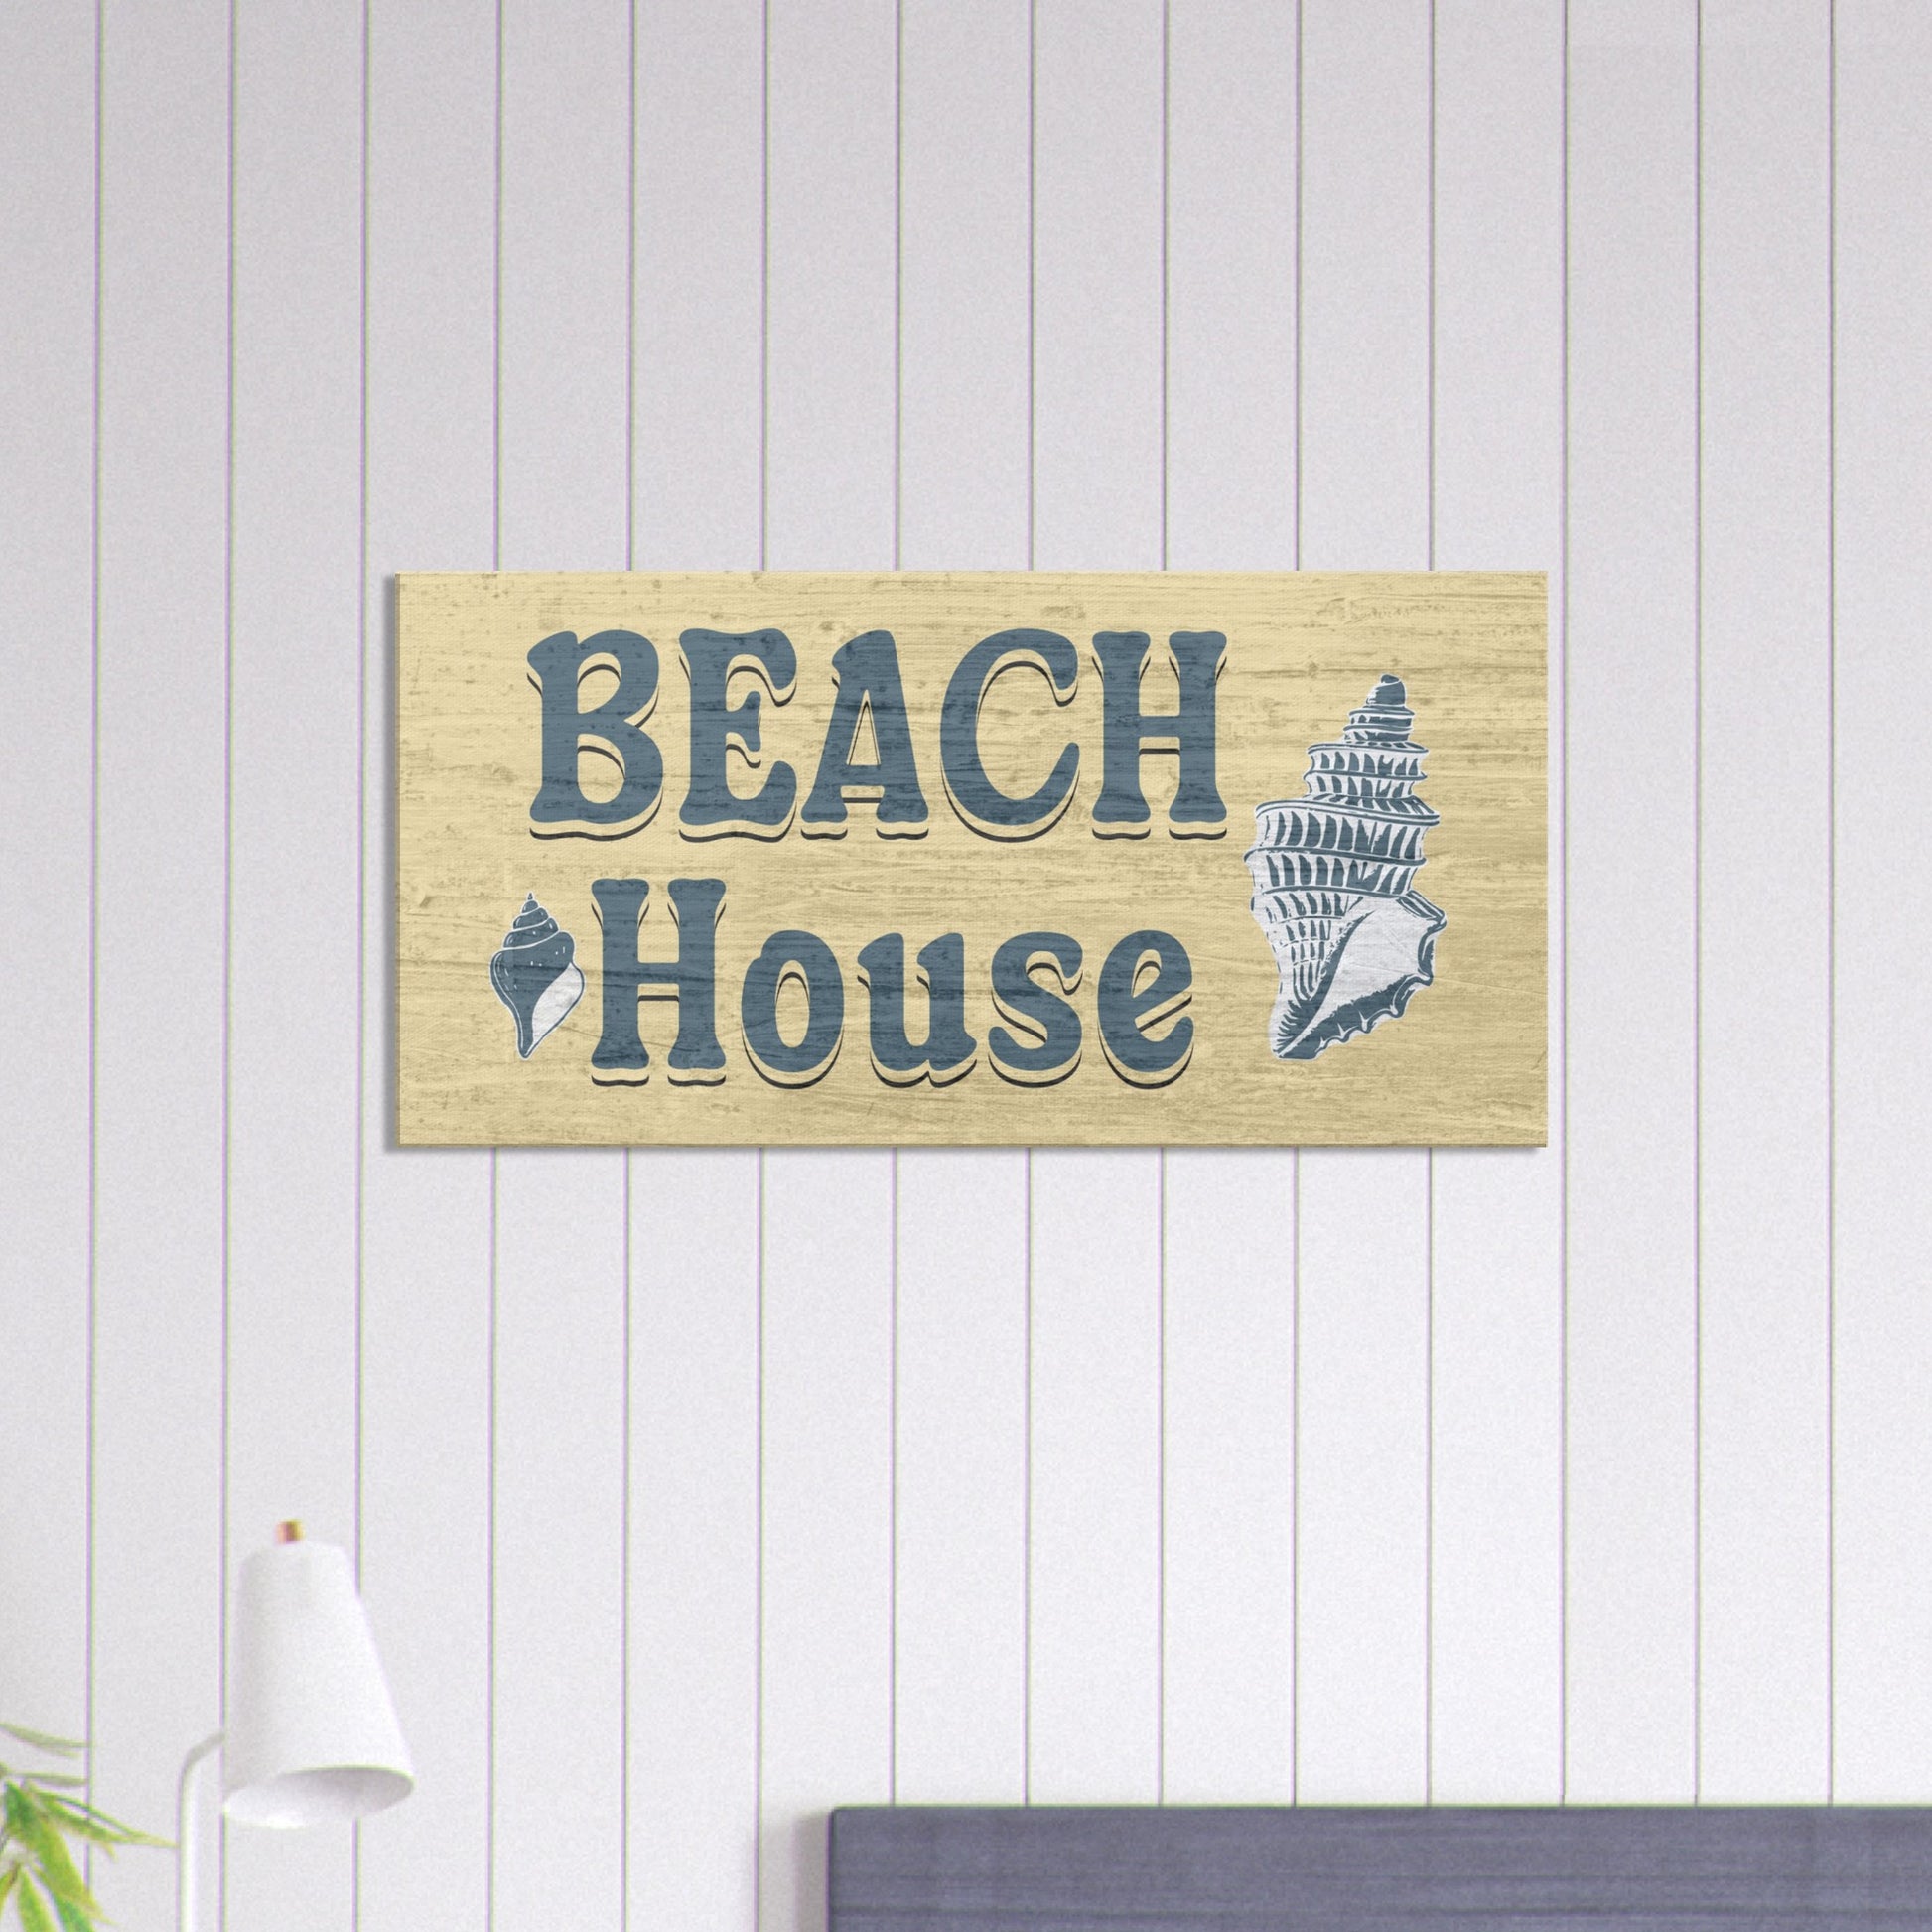 Beach House #1 Large Canvas Wall Prints - Caribbean Rays